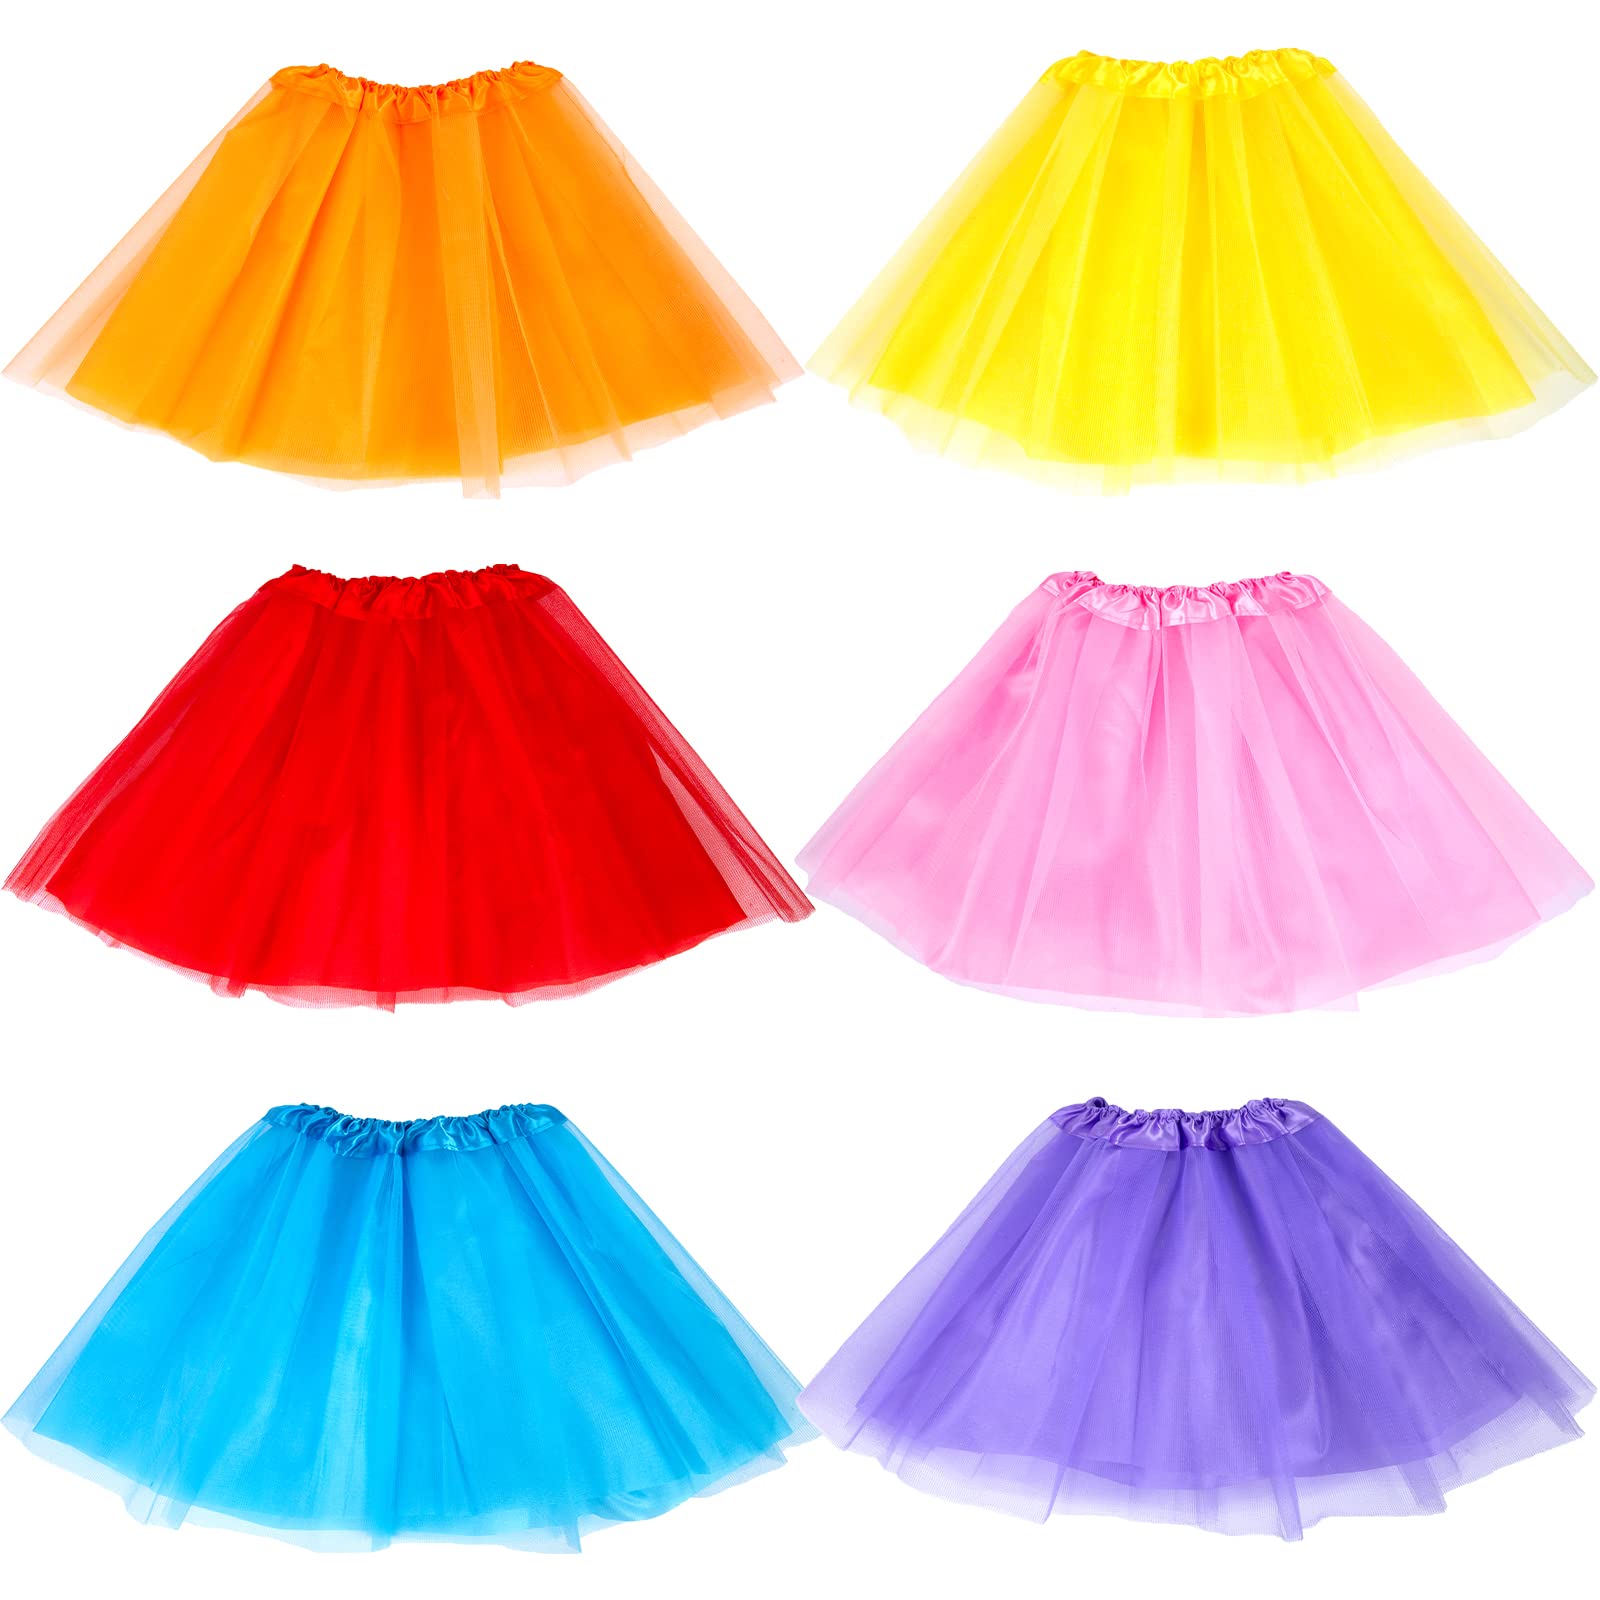 Koogel 6 PCS Tutu for Toddler Girls, 3-Layer Multicolor Tutu Skirts Ballet Tutu Dress Up Tutu Kids Party Tutu for Dress Up The Game Birthday Party Halloween Costume…